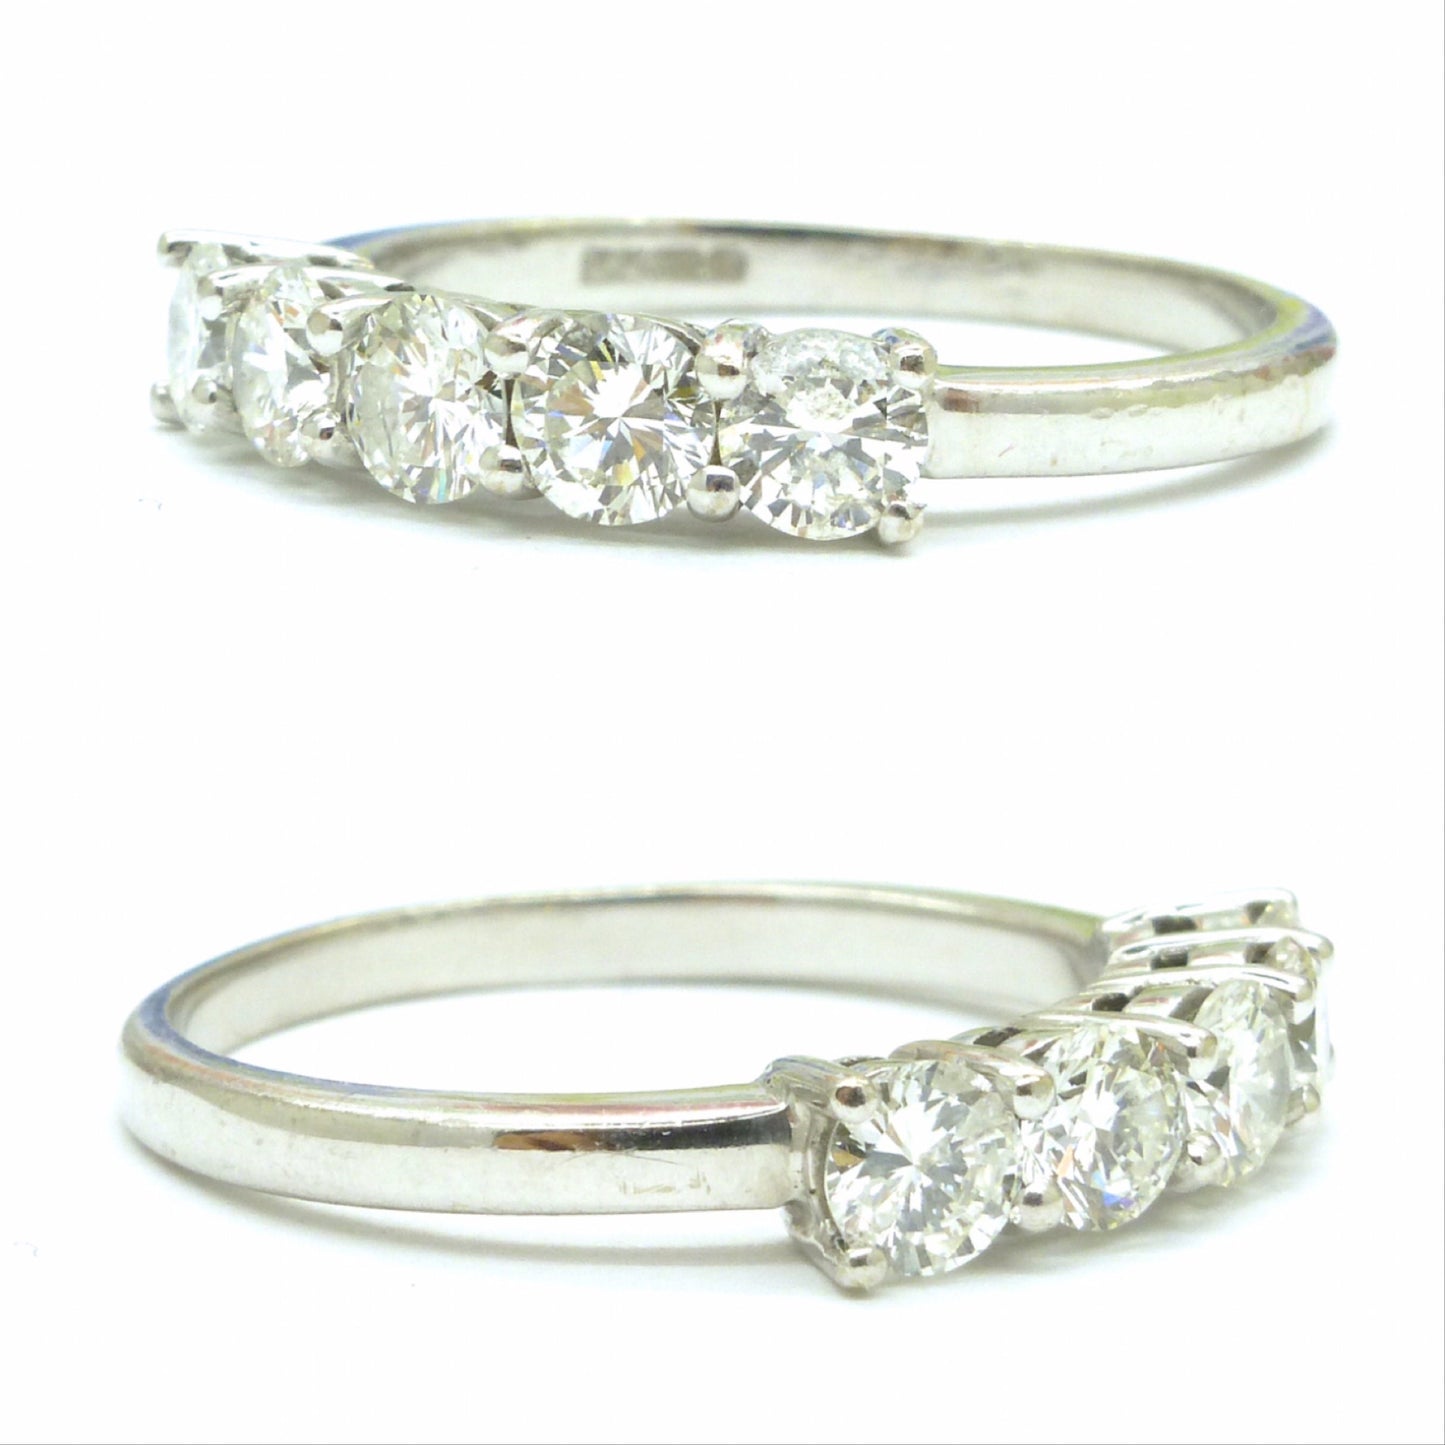 Vintage 18ct white gold five stone diamond ring 1.00 carat ~ eternity wedding band